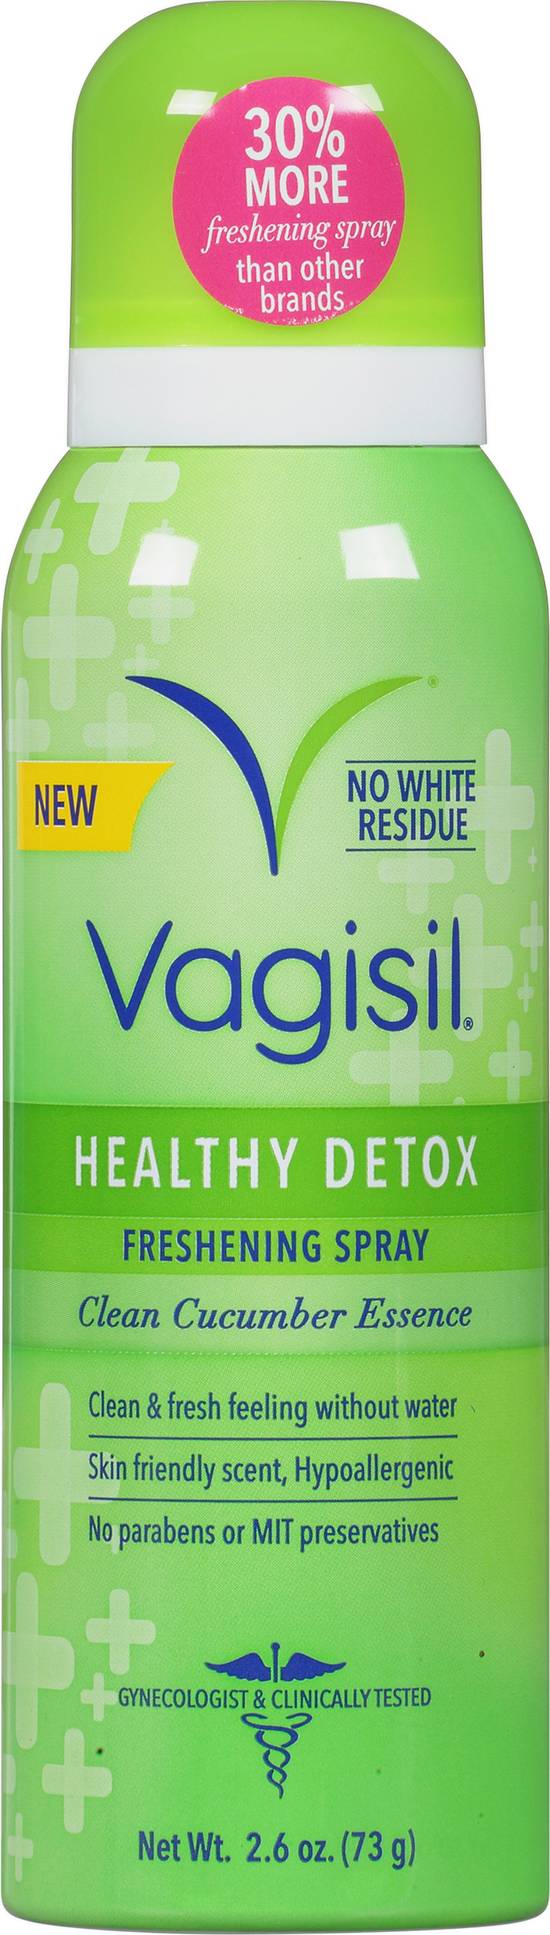 Vagisil Healthy Detox Clean Cucumber Essence Freshening Spray